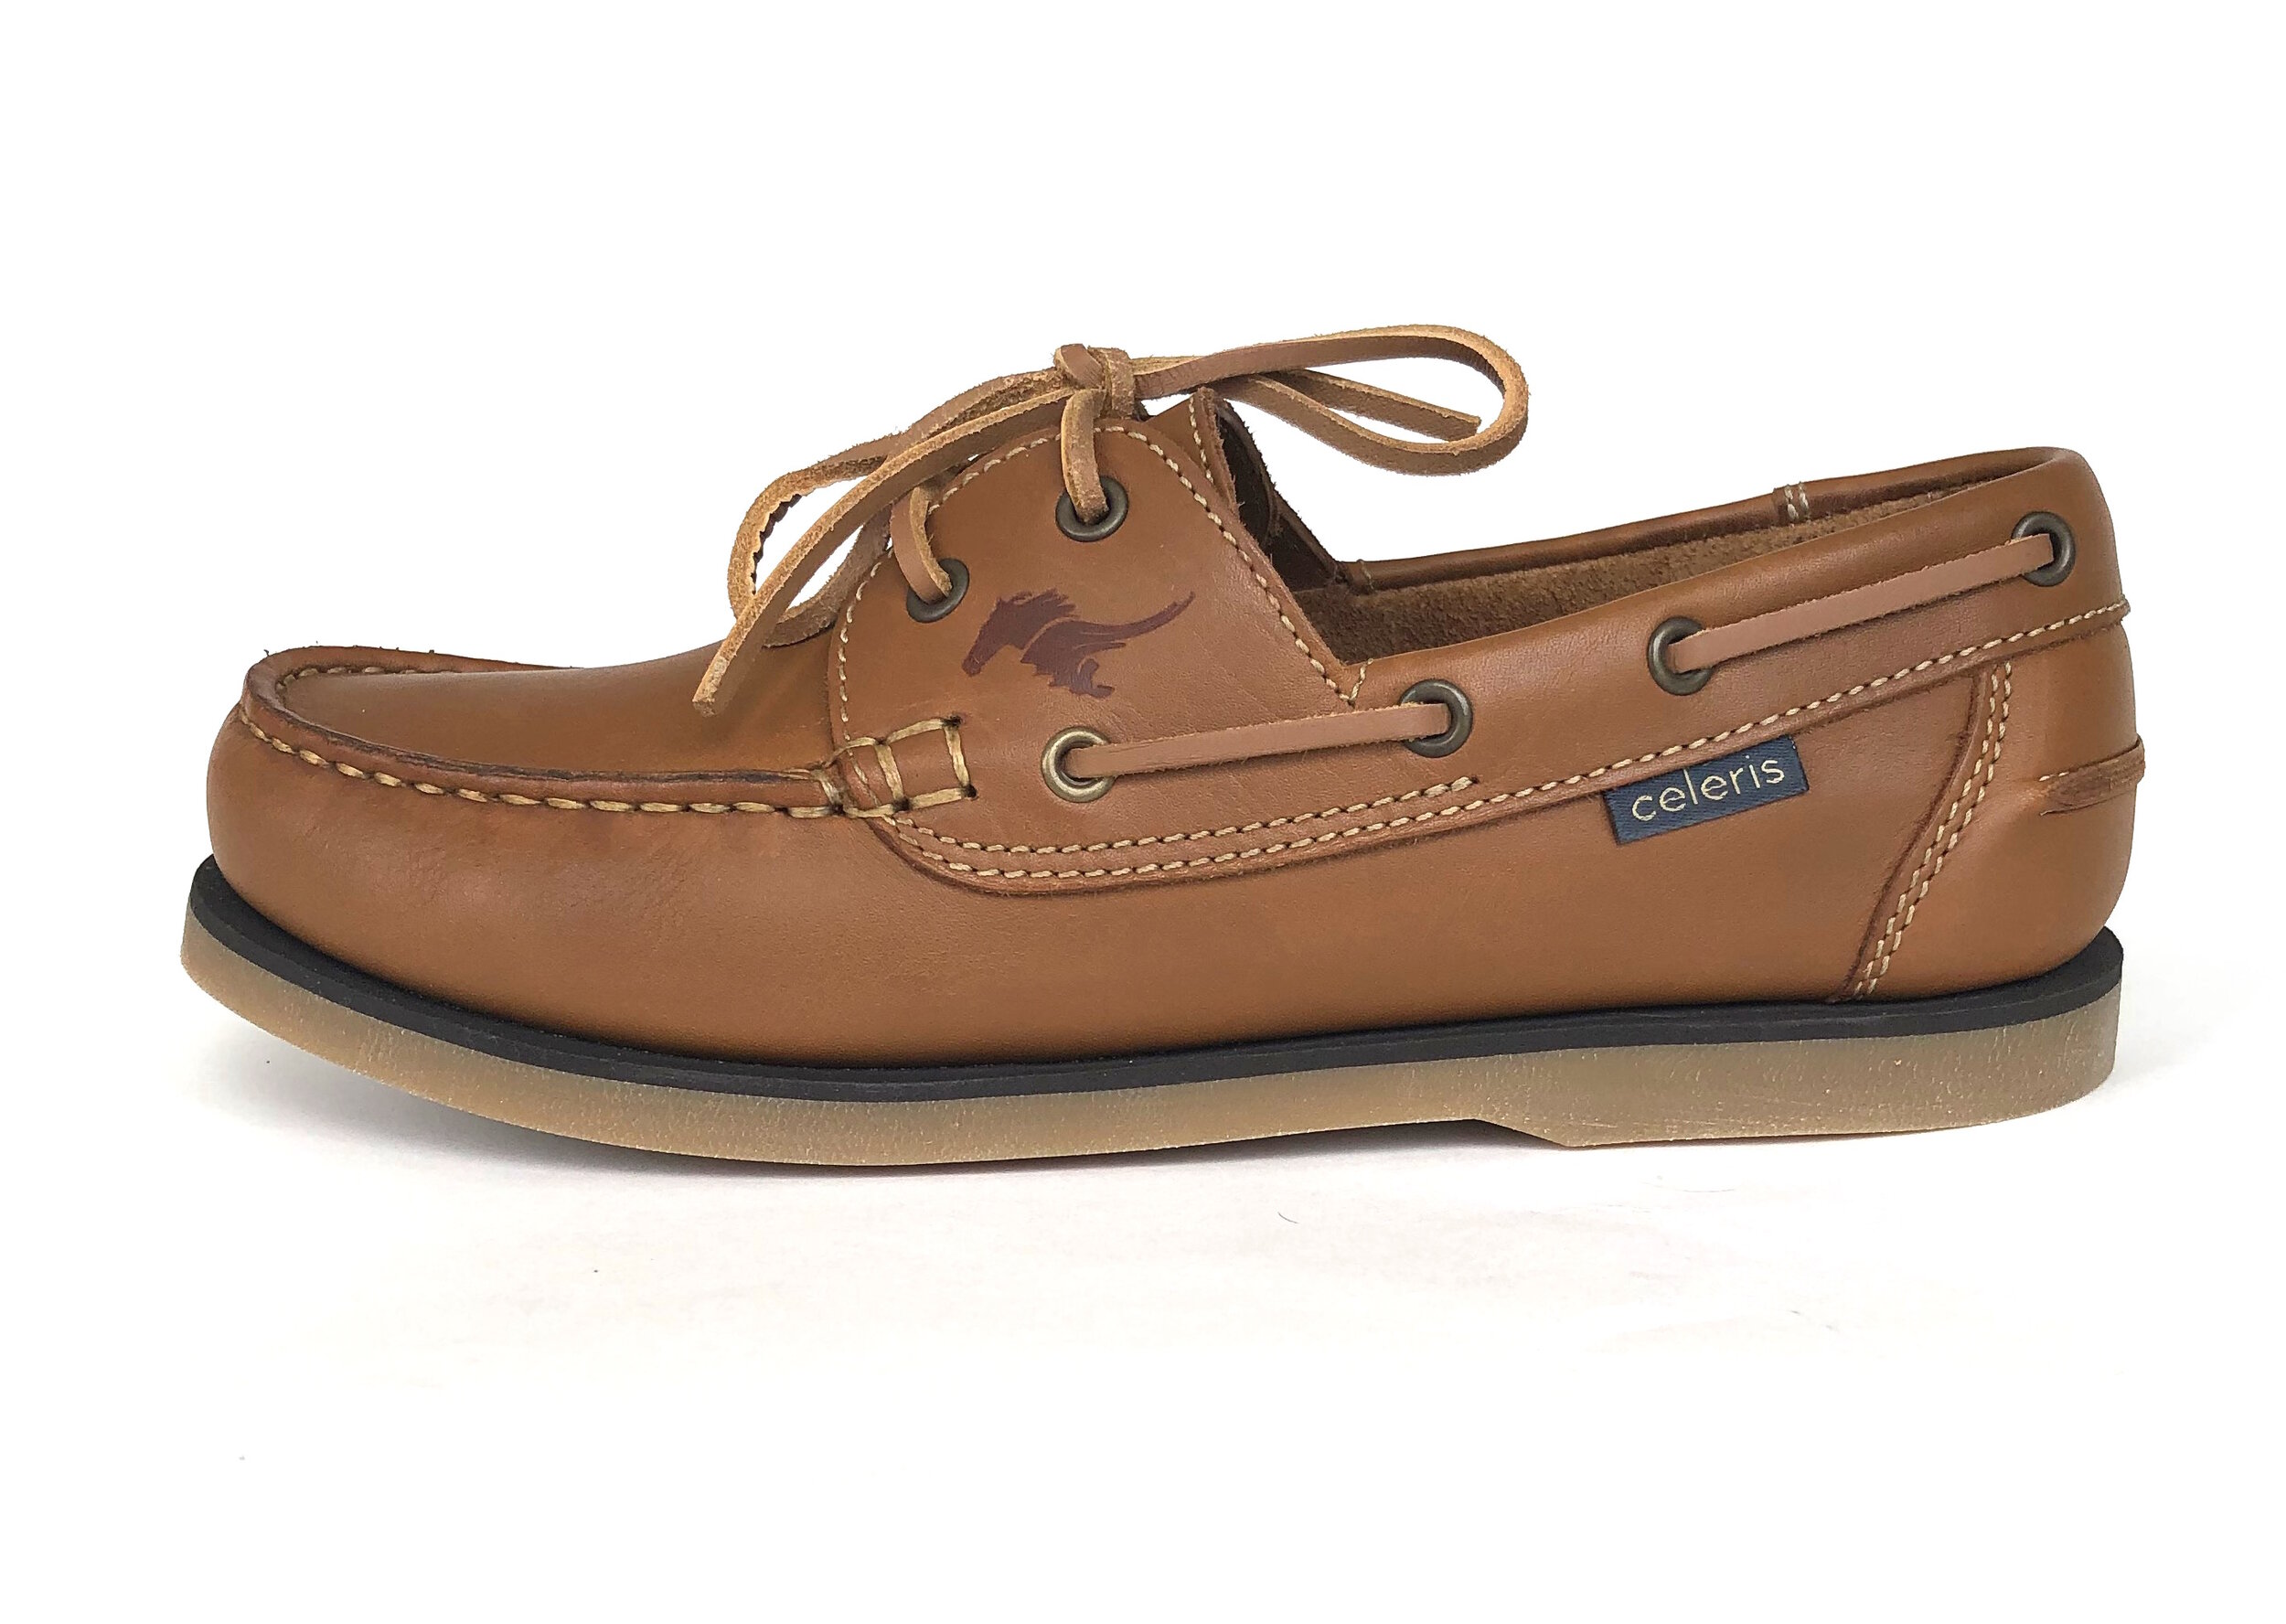 Mens Chatham Commodore Leather Boat Shoes Walnut UK Sizes